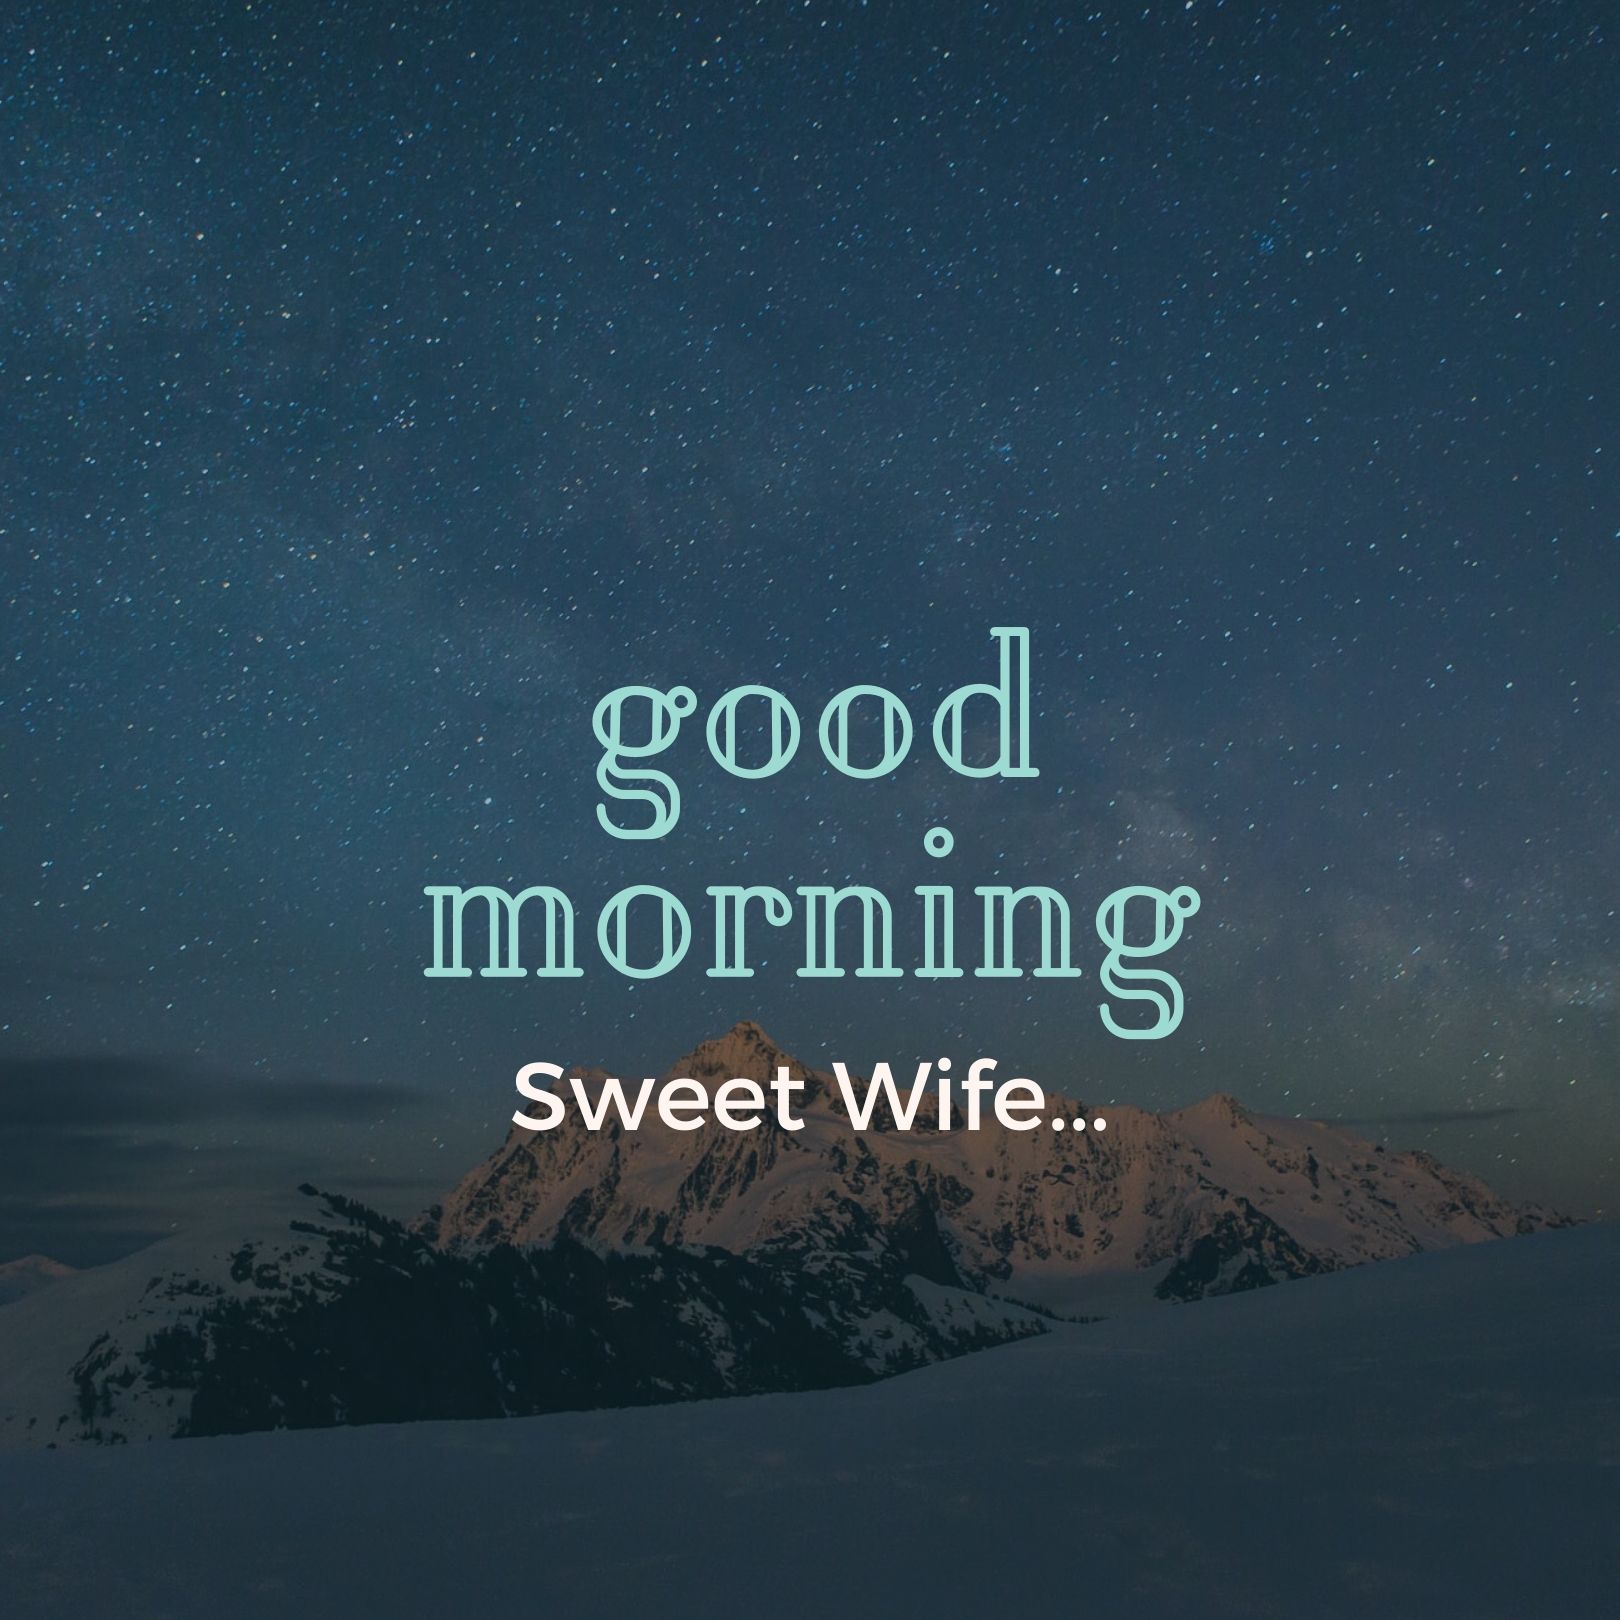 Good Night Sweet Wife Image